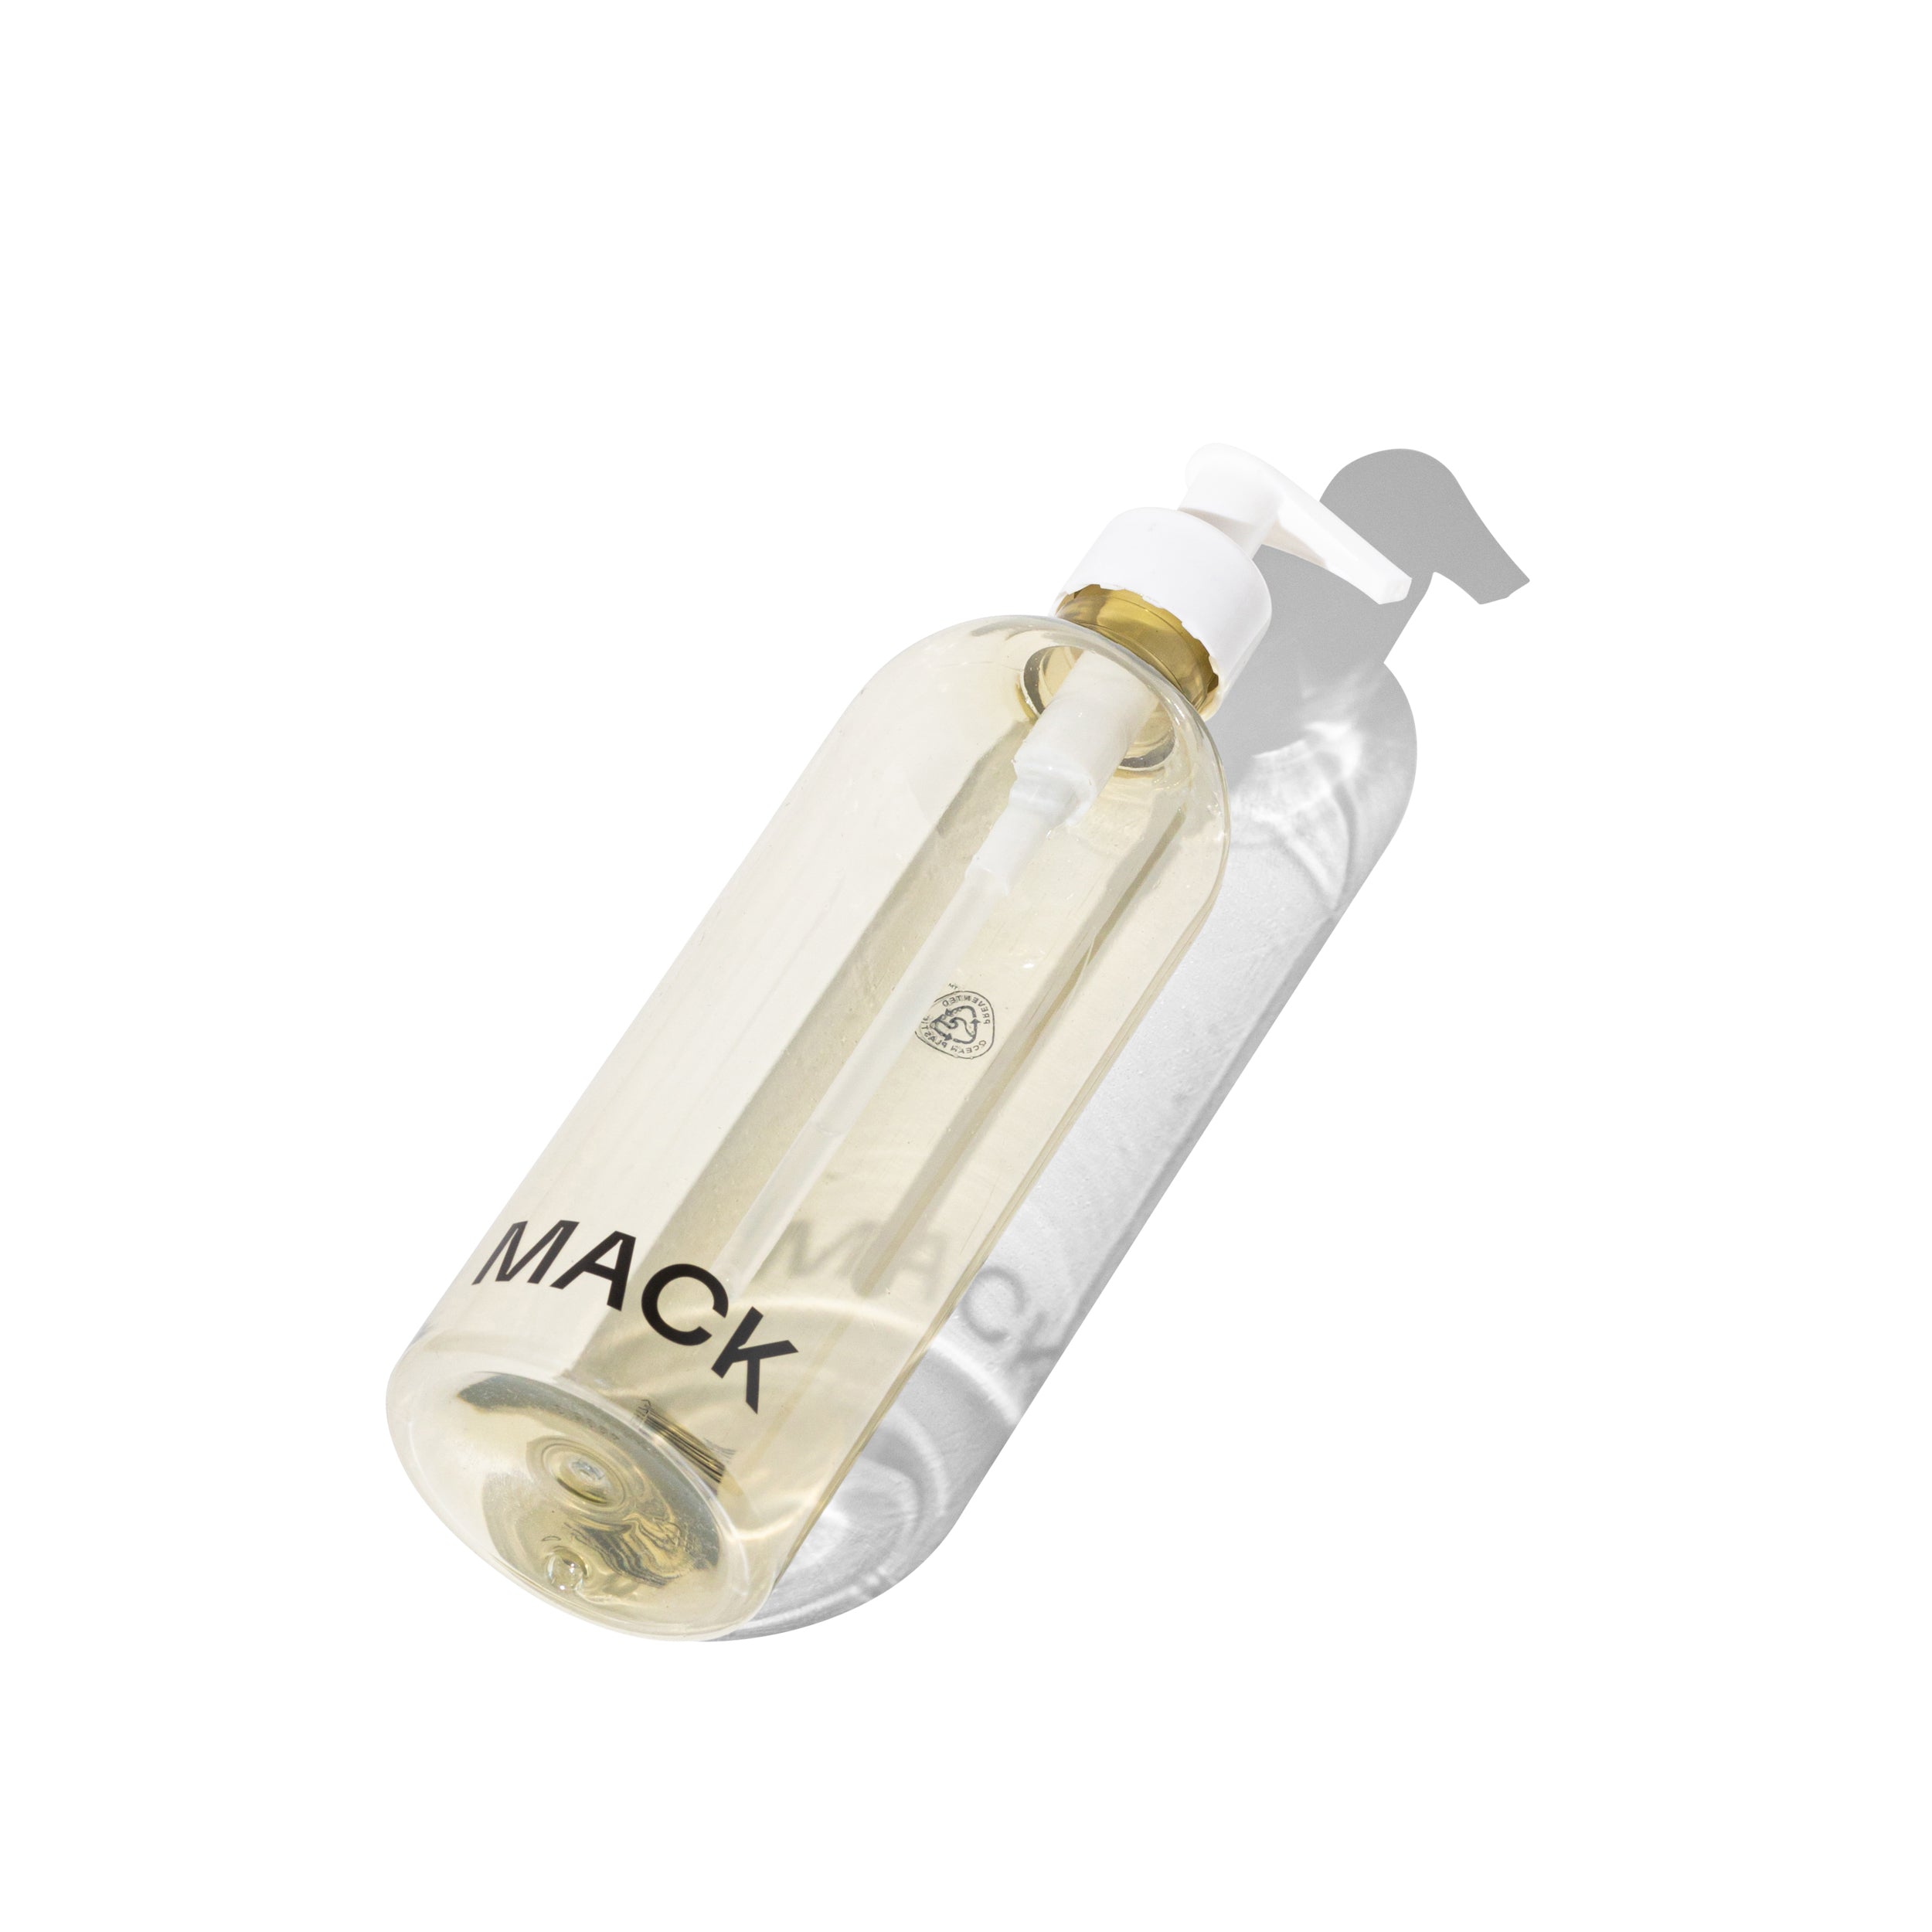 Pump Bottle - Prevented Ocean Plastic